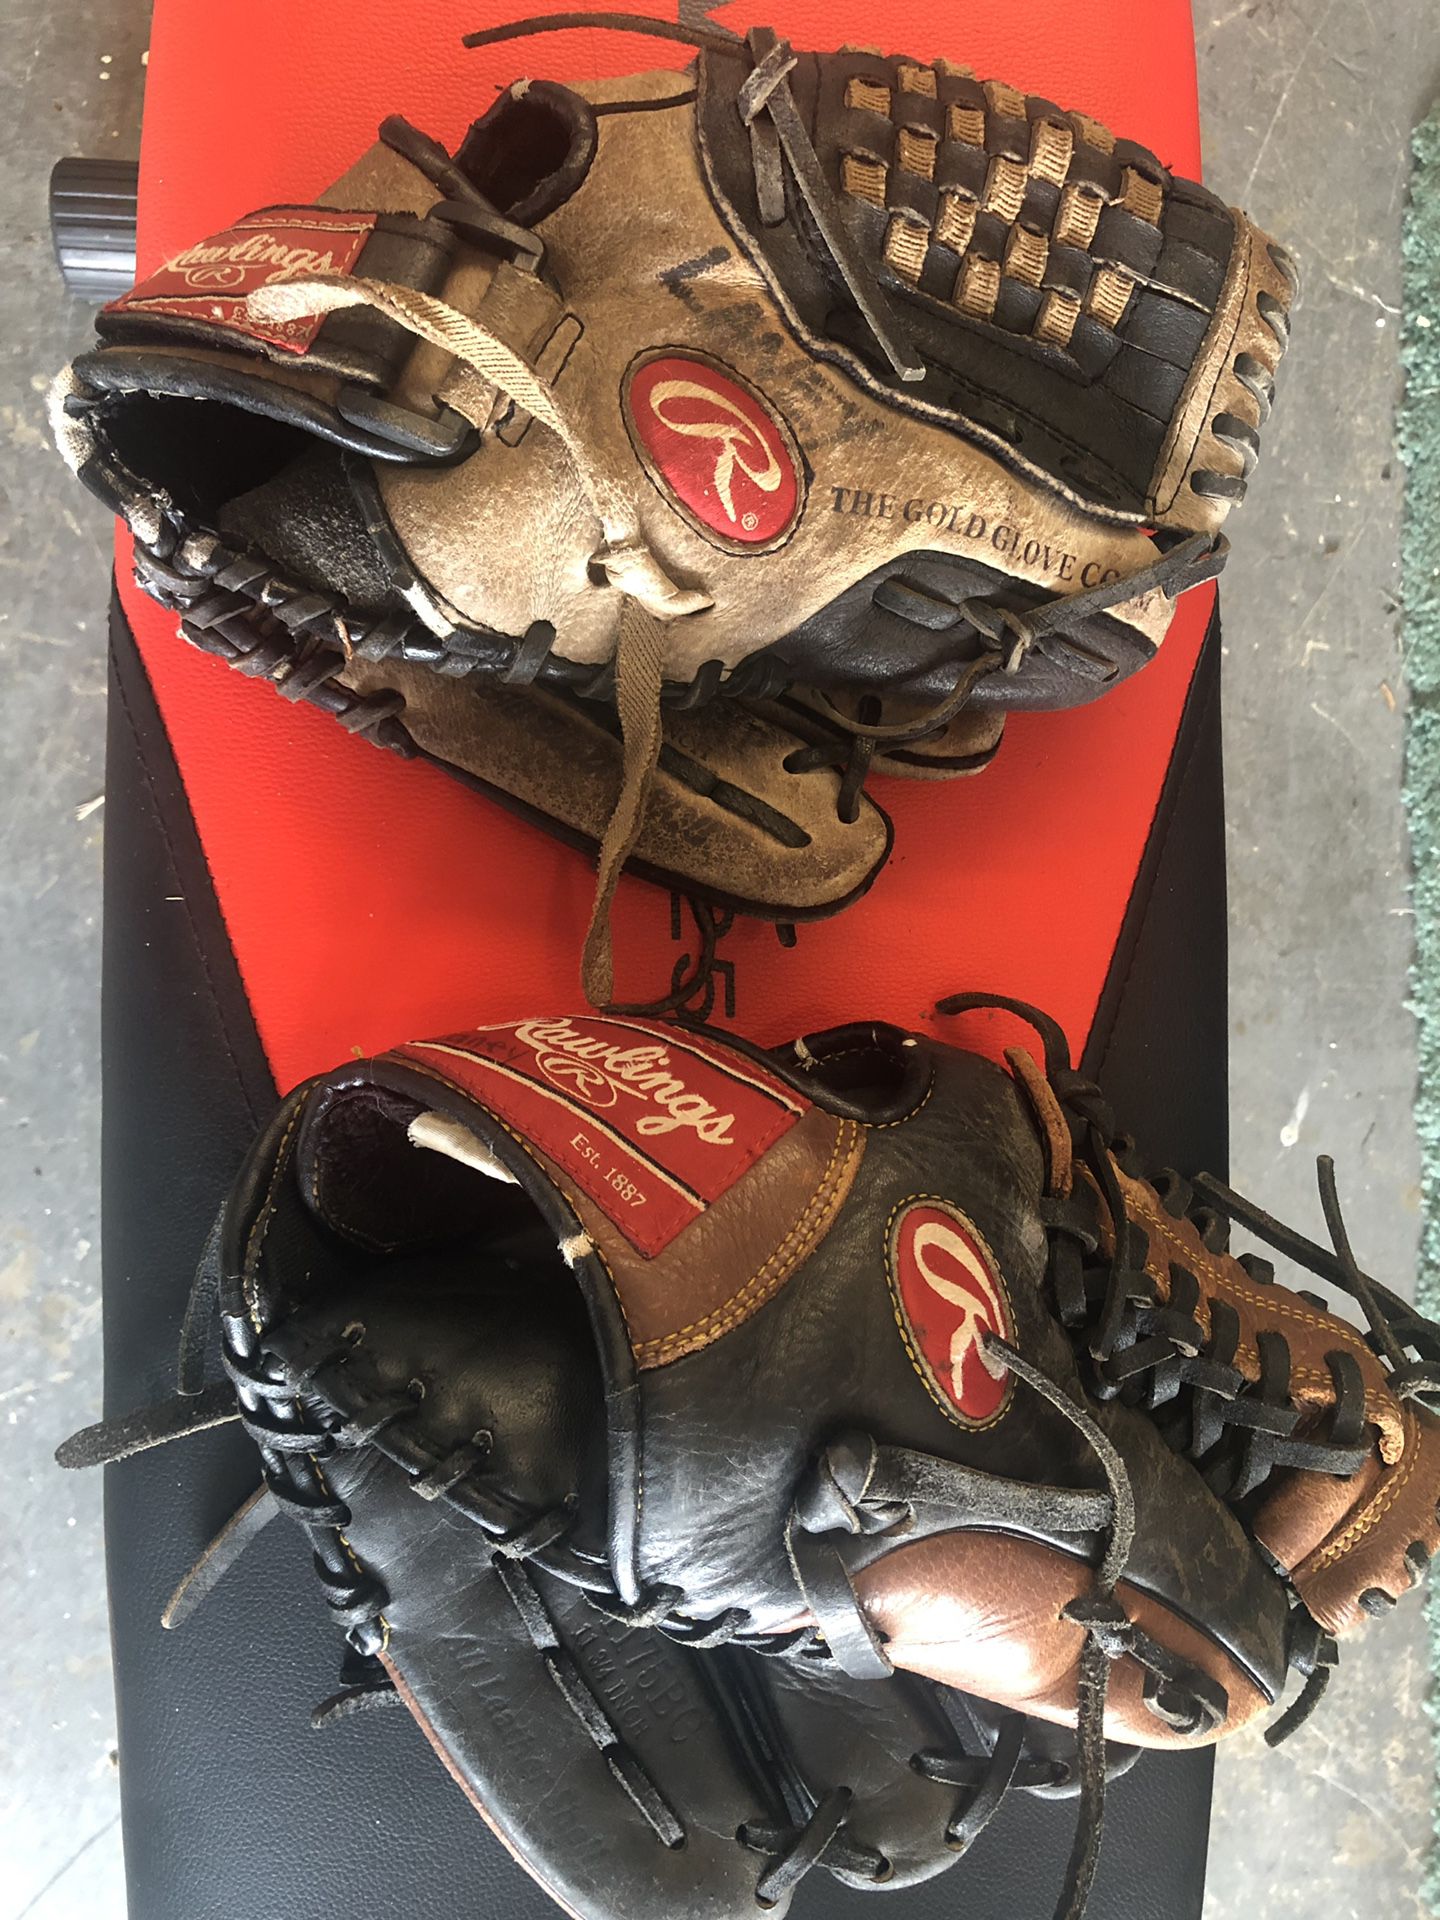 Two Rawlings baseball gloves